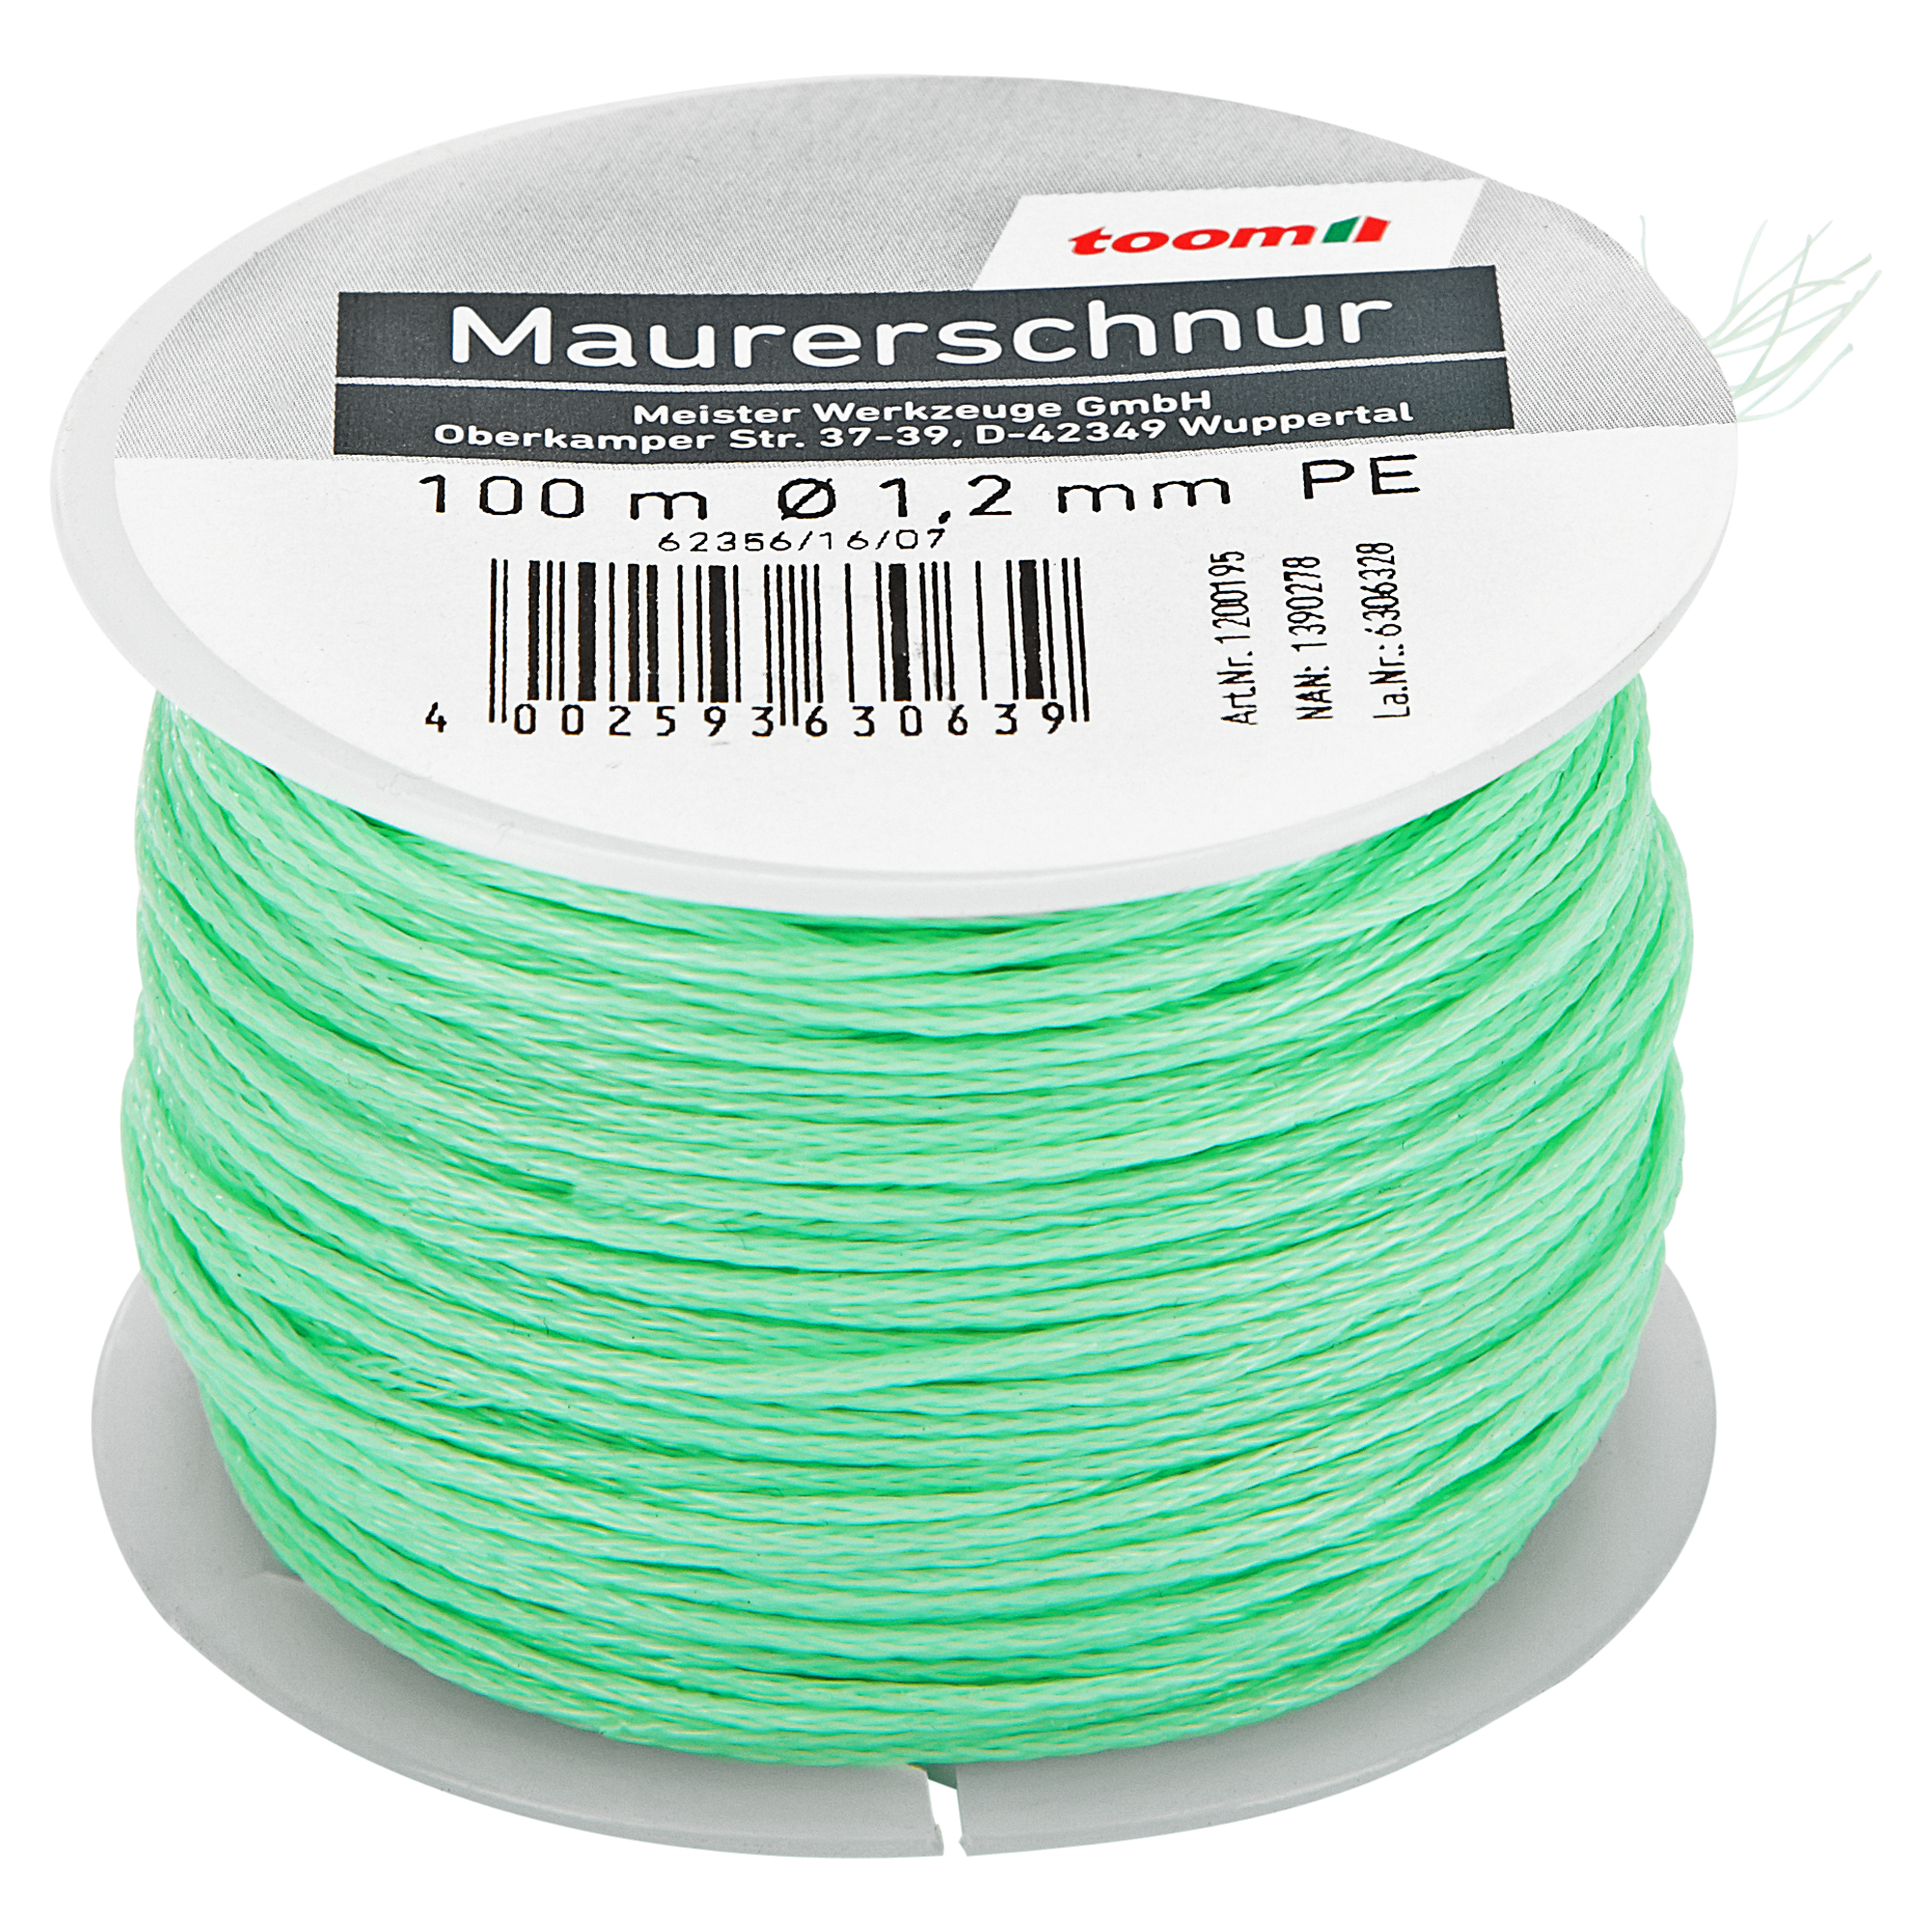 Maurerschnur grün Ø 1,2 mm x 100 m + product picture